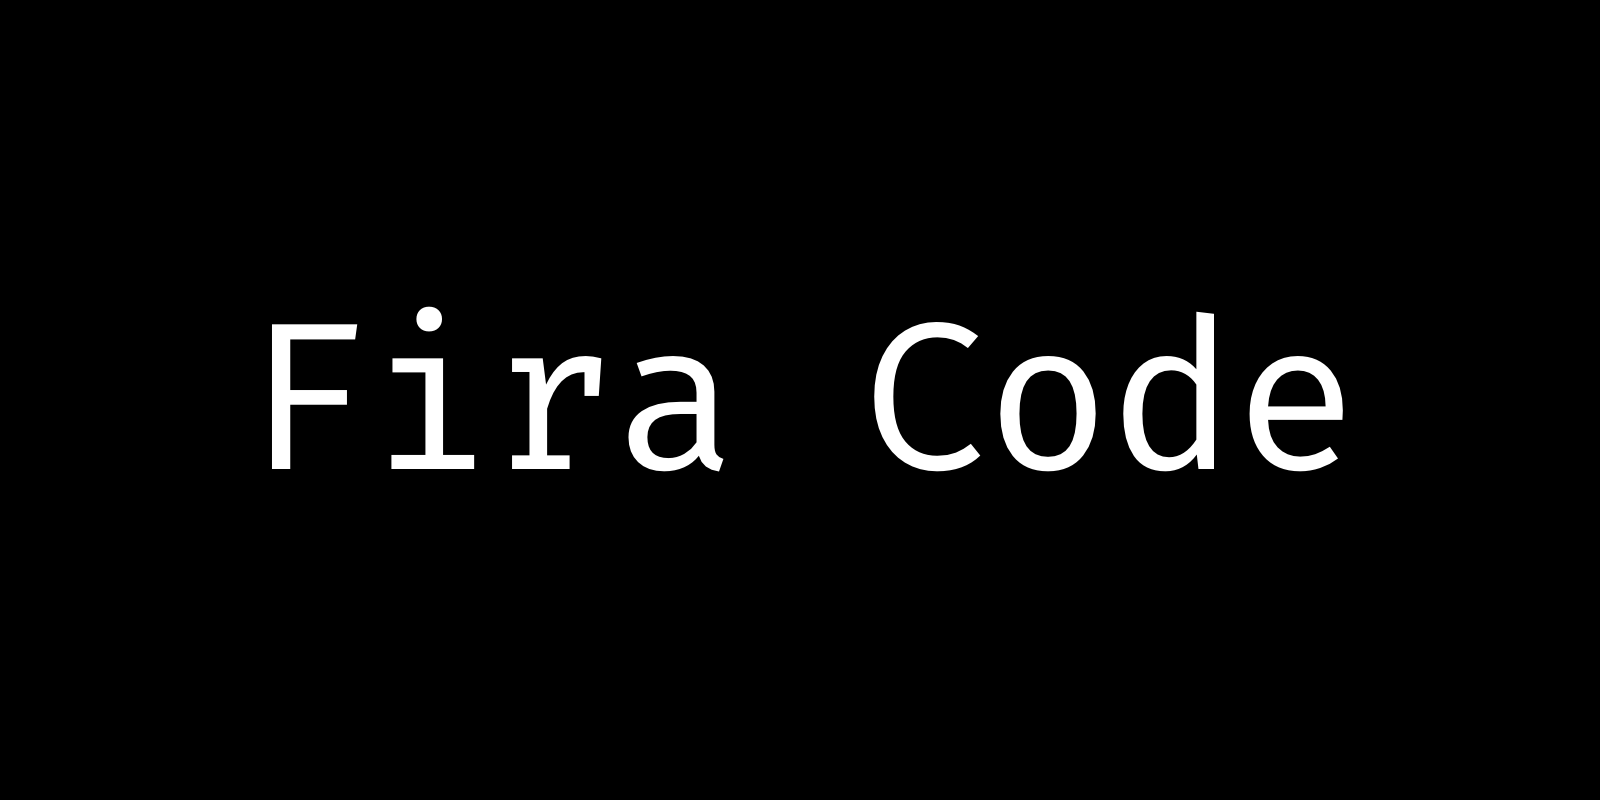 Fira Code by Nikita Prokopov